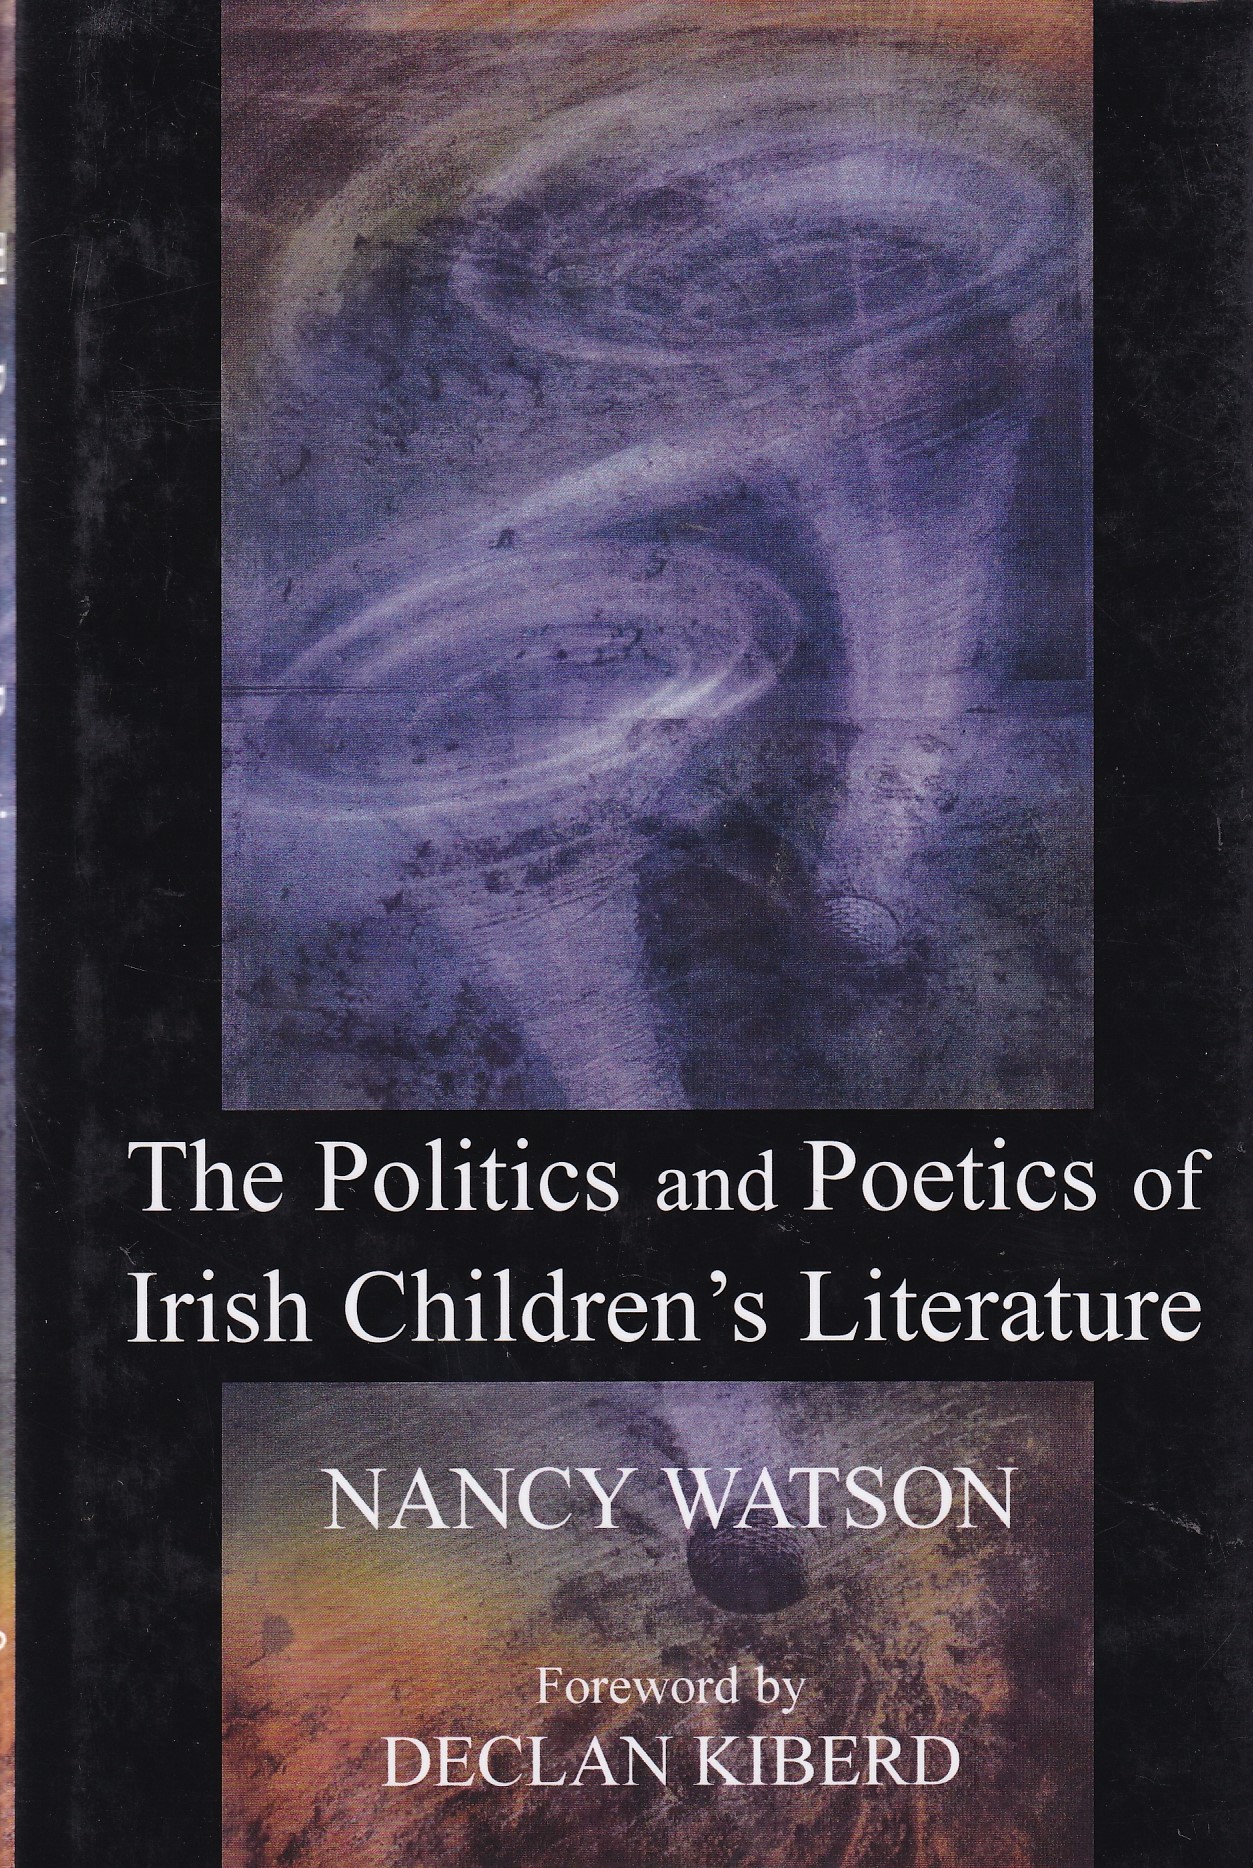 The Politics and Poetics of Irish Children’s Literature by Nancy Watson